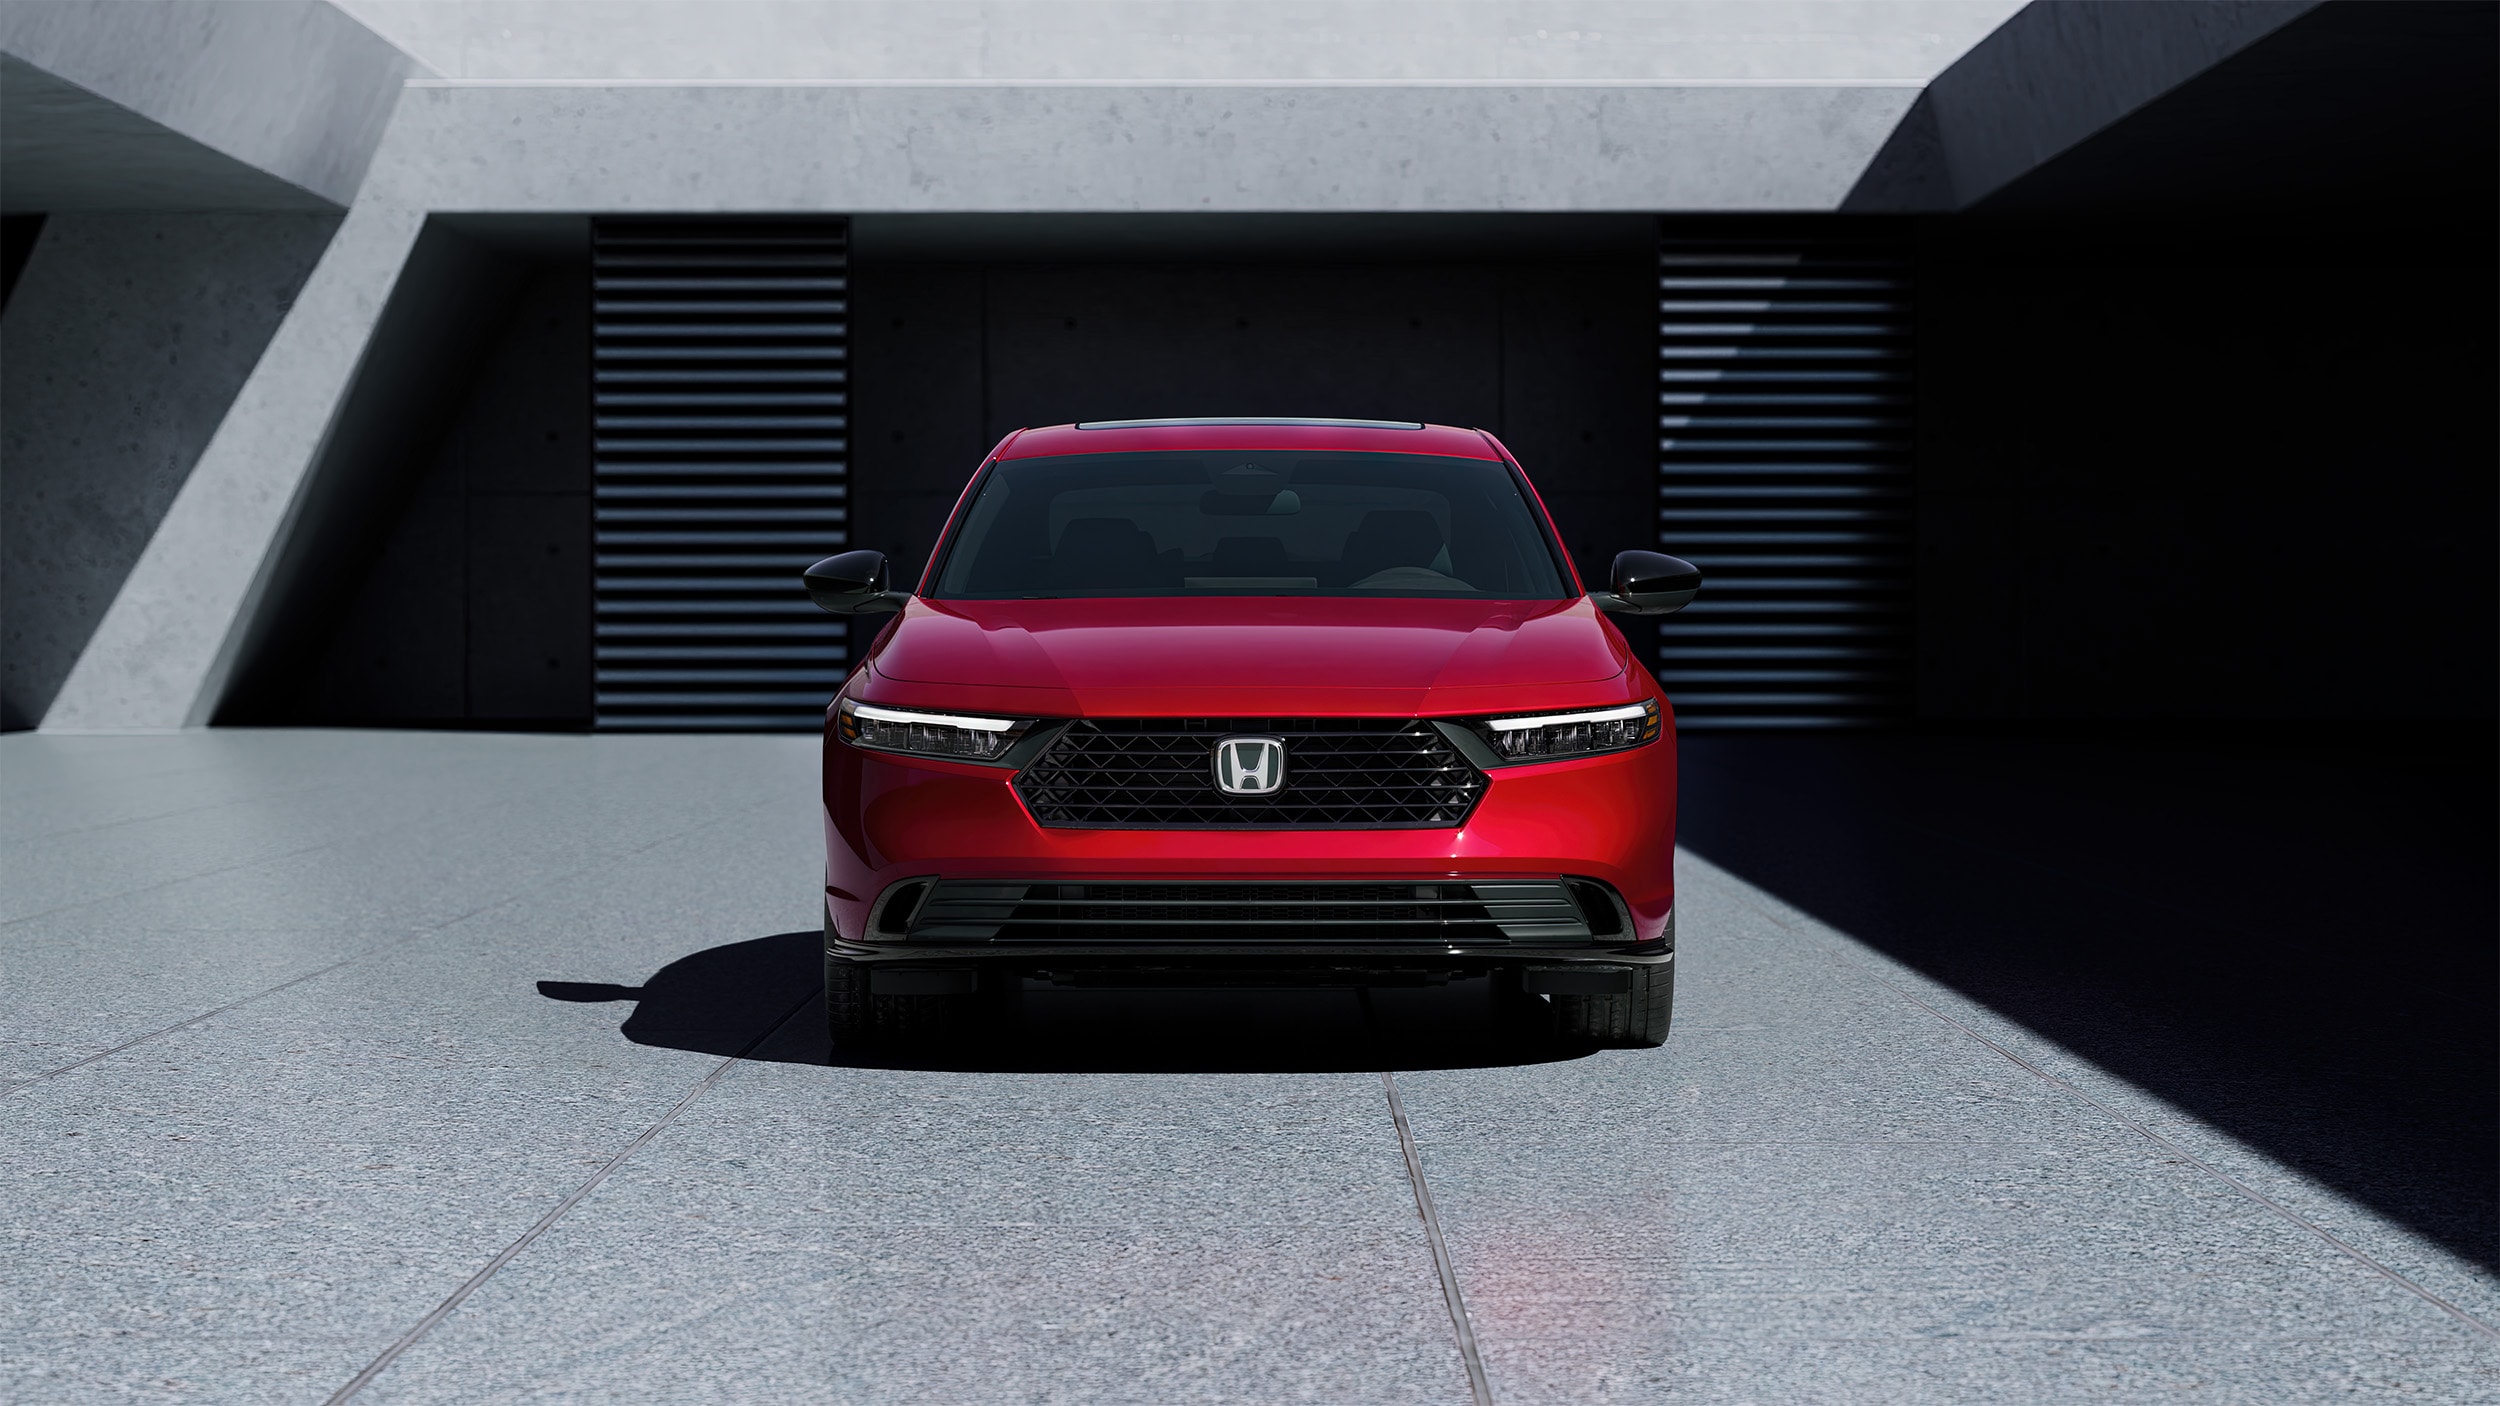 Honda Accord Hybrid Front View.jpg